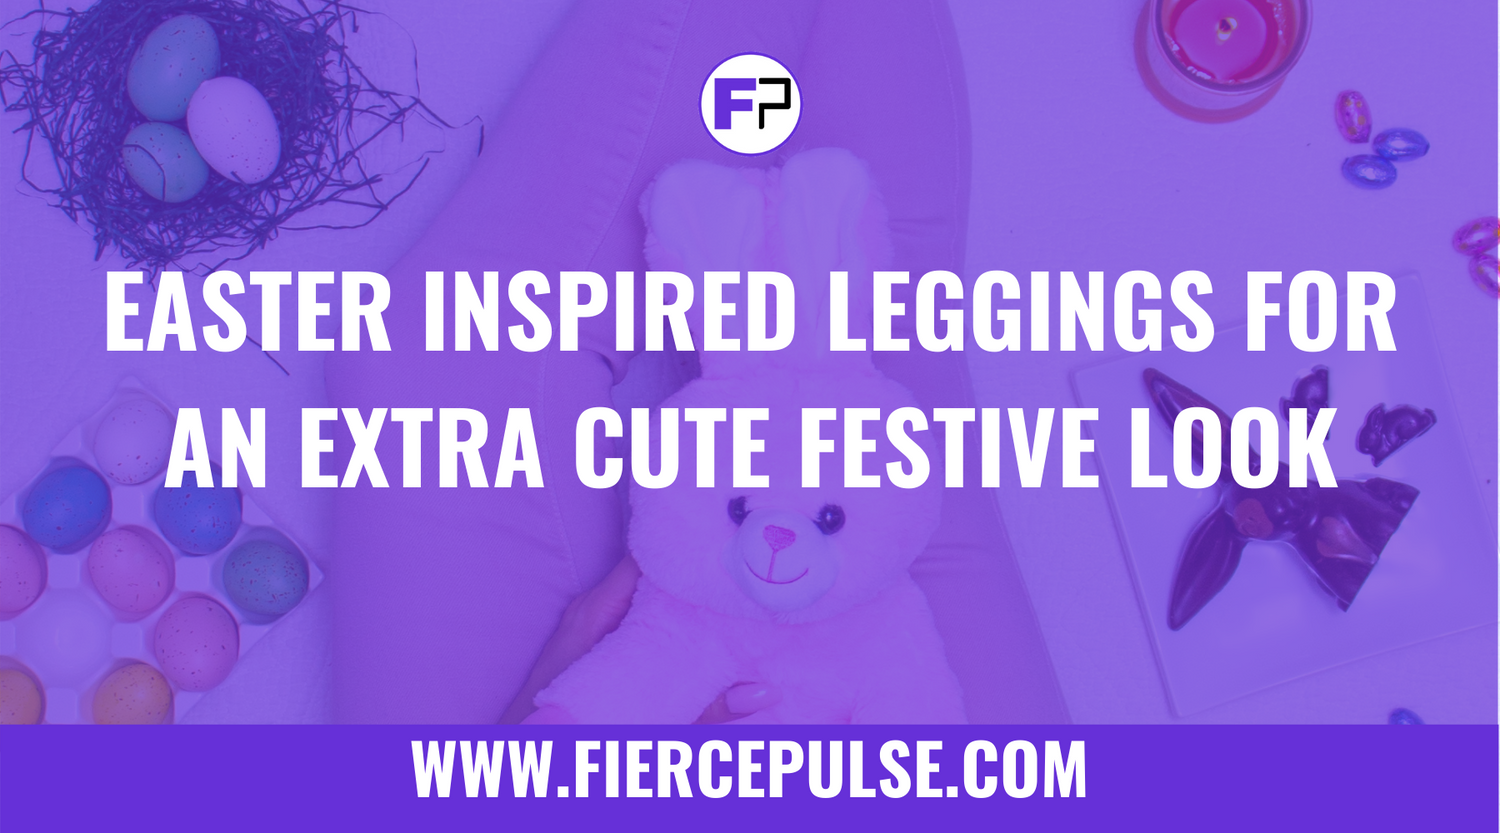 Easter Inspired Leggings for an Extra Cute Festive Look